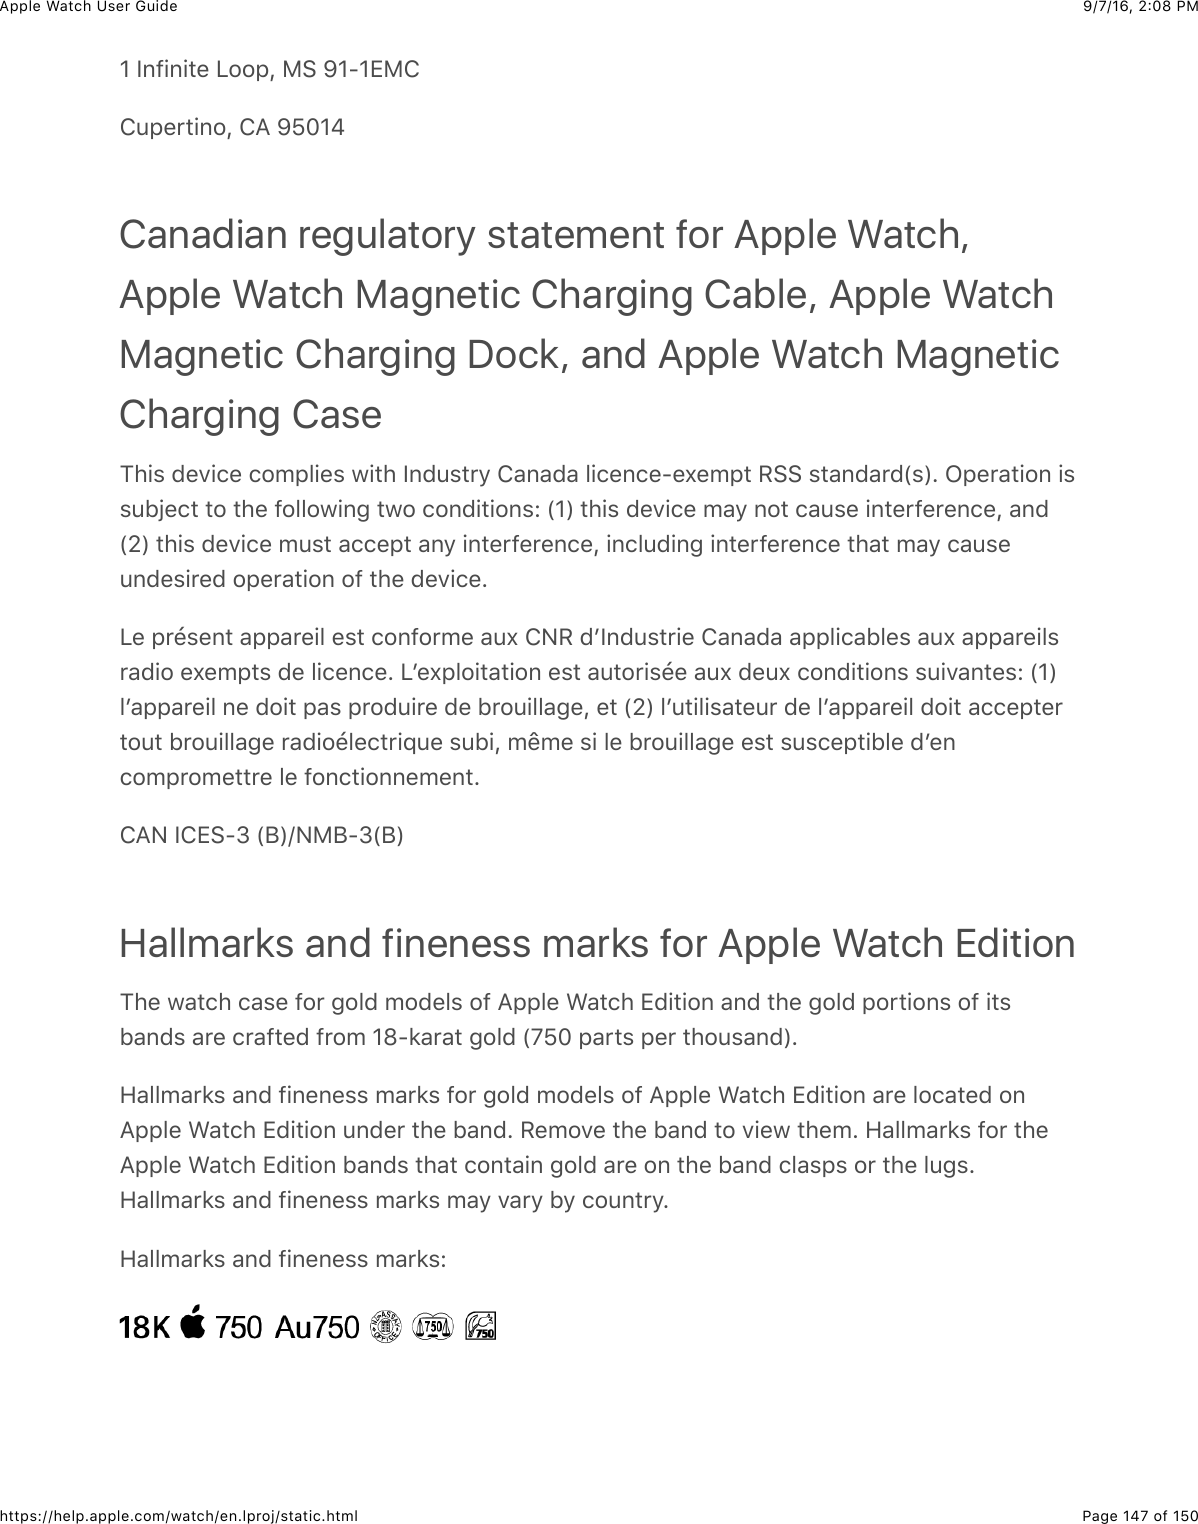 9/7/16, 2)08 PMApple Watch User GuidePage 147 of 150https://help.apple.com/watch/en.lproj/static.html]&amp;Y,@+,+3%&amp;&lt;##2J&amp;F6&amp;j]?]ZF!!42%*3+,#J&amp;!=&amp;j\^]qCanadian regulatory statement for Apple Watch,Apple Watch Magnetic Charging Cable, Apple WatchMagnetic Charging Dock, and Apple Watch MagneticCharging Case1)+$&amp;0%.+(%&amp;(#52&quot;+%$&amp;7+3)&amp;Y,04$3*/&amp;!&apos;,&apos;0&apos;&amp;&quot;+(%,(%?%U%523&amp;H66&amp;$3&apos;,0&apos;*0P$RC&amp;L2%*&apos;3+#,&amp;+$$4BO%(3&amp;3#&amp;3)%&amp;@#&quot;&quot;#7+,-&amp;37#&amp;(#,0+3+#,$e&amp;P]R&amp;3)+$&amp;0%.+(%&amp;5&apos;/&amp;,#3&amp;(&apos;4$%&amp;+,3%*@%*%,(%J&amp;&apos;,0PQR&amp;3)+$&amp;0%.+(%&amp;54$3&amp;&apos;((%23&amp;&apos;,/&amp;+,3%*@%*%,(%J&amp;+,(&quot;40+,-&amp;+,3%*@%*%,(%&amp;3)&apos;3&amp;5&apos;/&amp;(&apos;4$%4,0%$+*%0&amp;#2%*&apos;3+#,&amp;#@&amp;3)%&amp;0%.+(%C&lt;%&amp;2*x$%,3&amp;&apos;22&apos;*%+&quot;&amp;%$3&amp;(#,@#*5%&amp;&apos;4U&amp;!AH&amp;0WY,04$3*+%&amp;!&apos;,&apos;0&apos;&amp;&apos;22&quot;+(&apos;B&quot;%$&amp;&apos;4U&amp;&apos;22&apos;*%+&quot;$*&apos;0+#&amp;%U%523$&amp;0%&amp;&quot;+(%,(%C&amp;&lt;W%U2&quot;#+3&apos;3+#,&amp;%$3&amp;&apos;43#*+$x%&amp;&apos;4U&amp;0%4U&amp;(#,0+3+#,$&amp;$4+.&apos;,3%$e&amp;P]R&quot;W&apos;22&apos;*%+&quot;&amp;,%&amp;0#+3&amp;2&apos;$&amp;2*#04+*%&amp;0%&amp;B*#4+&quot;&quot;&apos;-%J&amp;%3&amp;PQR&amp;&quot;W43+&quot;+$&apos;3%4*&amp;0%&amp;&quot;W&apos;22&apos;*%+&quot;&amp;0#+3&amp;&apos;((%23%*3#43&amp;B*#4+&quot;&quot;&apos;-%&amp;*&apos;0+#x&quot;%(3*+X4%&amp;$4B+J&amp;5y5%&amp;$+&amp;&quot;%&amp;B*#4+&quot;&quot;&apos;-%&amp;%$3&amp;$4$(%23+B&quot;%&amp;0W%,(#52*#5%33*%&amp;&quot;%&amp;@#,(3+#,,%5%,3C!=A&amp;Y!Z6?M&amp;P;RoAF;?MP;RHallmarks and fineness marks for Apple Watch Edition1)%&amp;7&apos;3()&amp;(&apos;$%&amp;@#*&amp;-#&quot;0&amp;5#0%&quot;$&amp;#@&amp;=22&quot;%&amp;&gt;&apos;3()&amp;Z0+3+#,&amp;&apos;,0&amp;3)%&amp;-#&quot;0&amp;2#*3+#,$&amp;#@&amp;+3$B&apos;,0$&amp;&apos;*%&amp;(*&apos;@3%0&amp;@*#5&amp;]f?8&apos;*&apos;3&amp;-#&quot;0&amp;Pg\^&amp;2&apos;*3$&amp;2%*&amp;3)#4$&apos;,0RC9&apos;&quot;&quot;5&apos;*8$&amp;&apos;,0&amp;@+,%,%$$&amp;5&apos;*8$&amp;@#*&amp;-#&quot;0&amp;5#0%&quot;$&amp;#@&amp;=22&quot;%&amp;&gt;&apos;3()&amp;Z0+3+#,&amp;&apos;*%&amp;&quot;#(&apos;3%0&amp;#,=22&quot;%&amp;&gt;&apos;3()&amp;Z0+3+#,&amp;4,0%*&amp;3)%&amp;B&apos;,0C&amp;H%5#.%&amp;3)%&amp;B&apos;,0&amp;3#&amp;.+%7&amp;3)%5C&amp;9&apos;&quot;&quot;5&apos;*8$&amp;@#*&amp;3)%=22&quot;%&amp;&gt;&apos;3()&amp;Z0+3+#,&amp;B&apos;,0$&amp;3)&apos;3&amp;(#,3&apos;+,&amp;-#&quot;0&amp;&apos;*%&amp;#,&amp;3)%&amp;B&apos;,0&amp;(&quot;&apos;$2$&amp;#*&amp;3)%&amp;&quot;4-$C9&apos;&quot;&quot;5&apos;*8$&amp;&apos;,0&amp;@+,%,%$$&amp;5&apos;*8$&amp;5&apos;/&amp;.&apos;*/&amp;B/&amp;(#4,3*/C9&apos;&quot;&quot;5&apos;*8$&amp;&apos;,0&amp;@+,%,%$$&amp;5&apos;*8$e